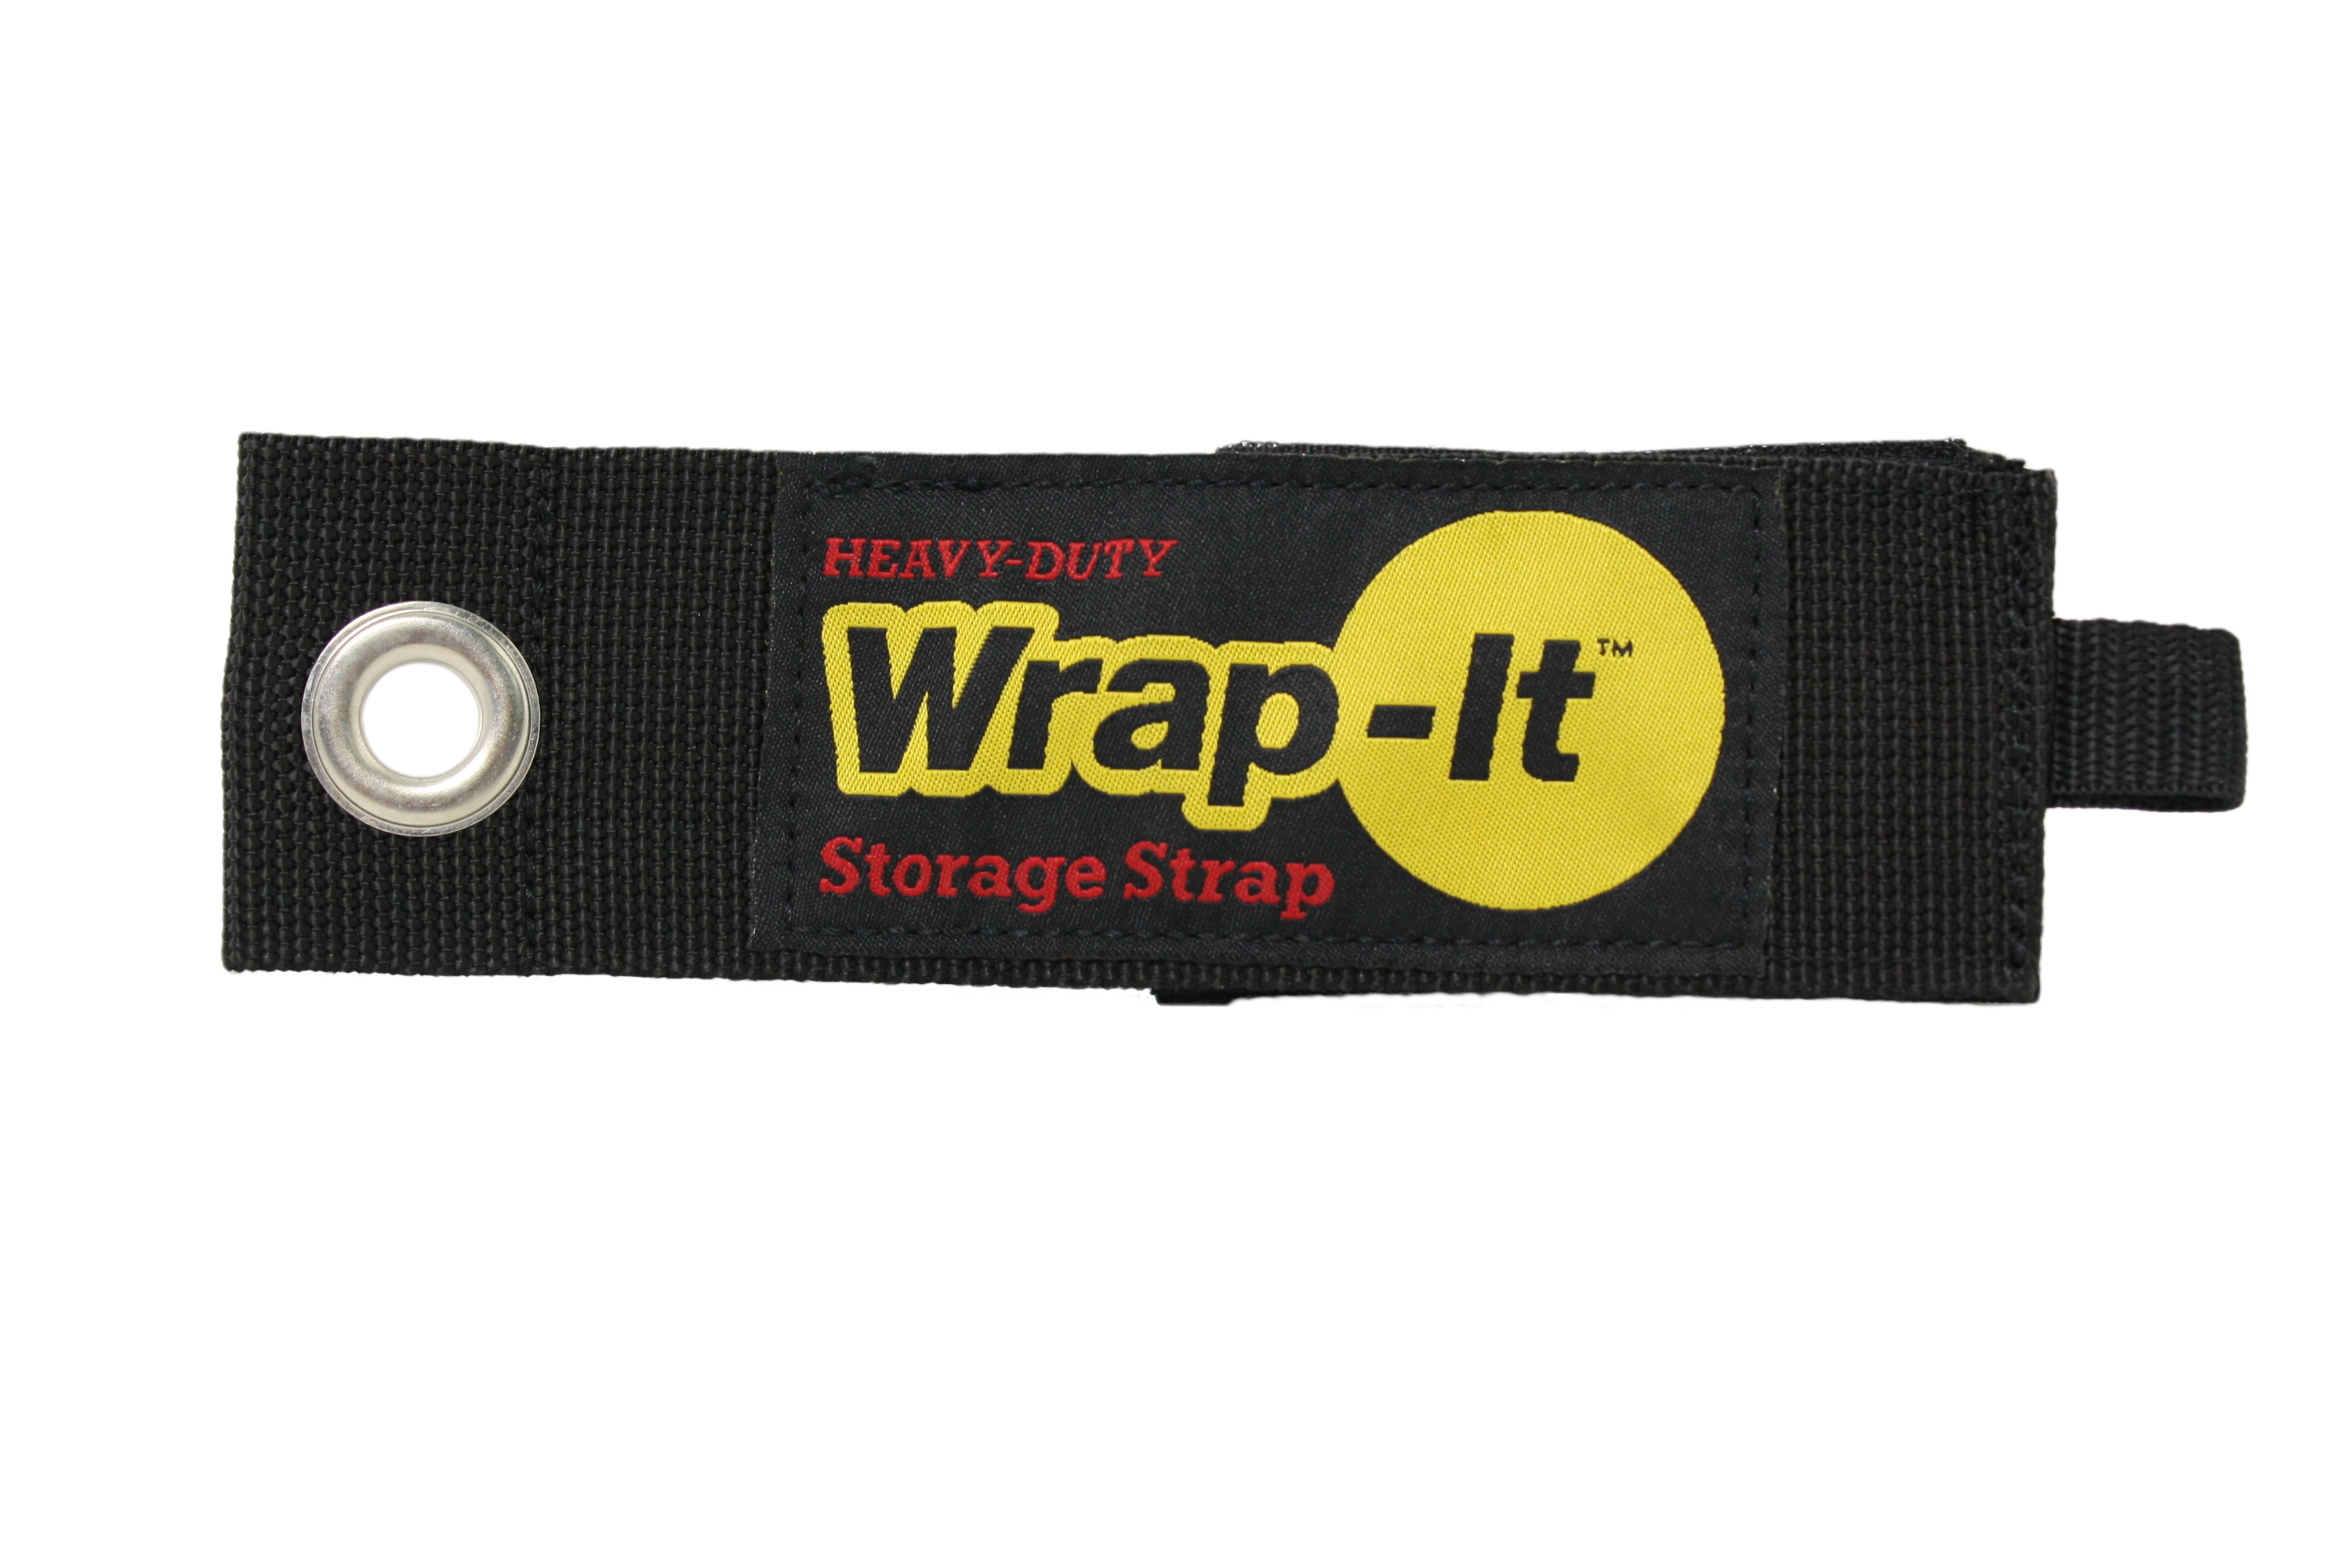 Wrap-It, front view